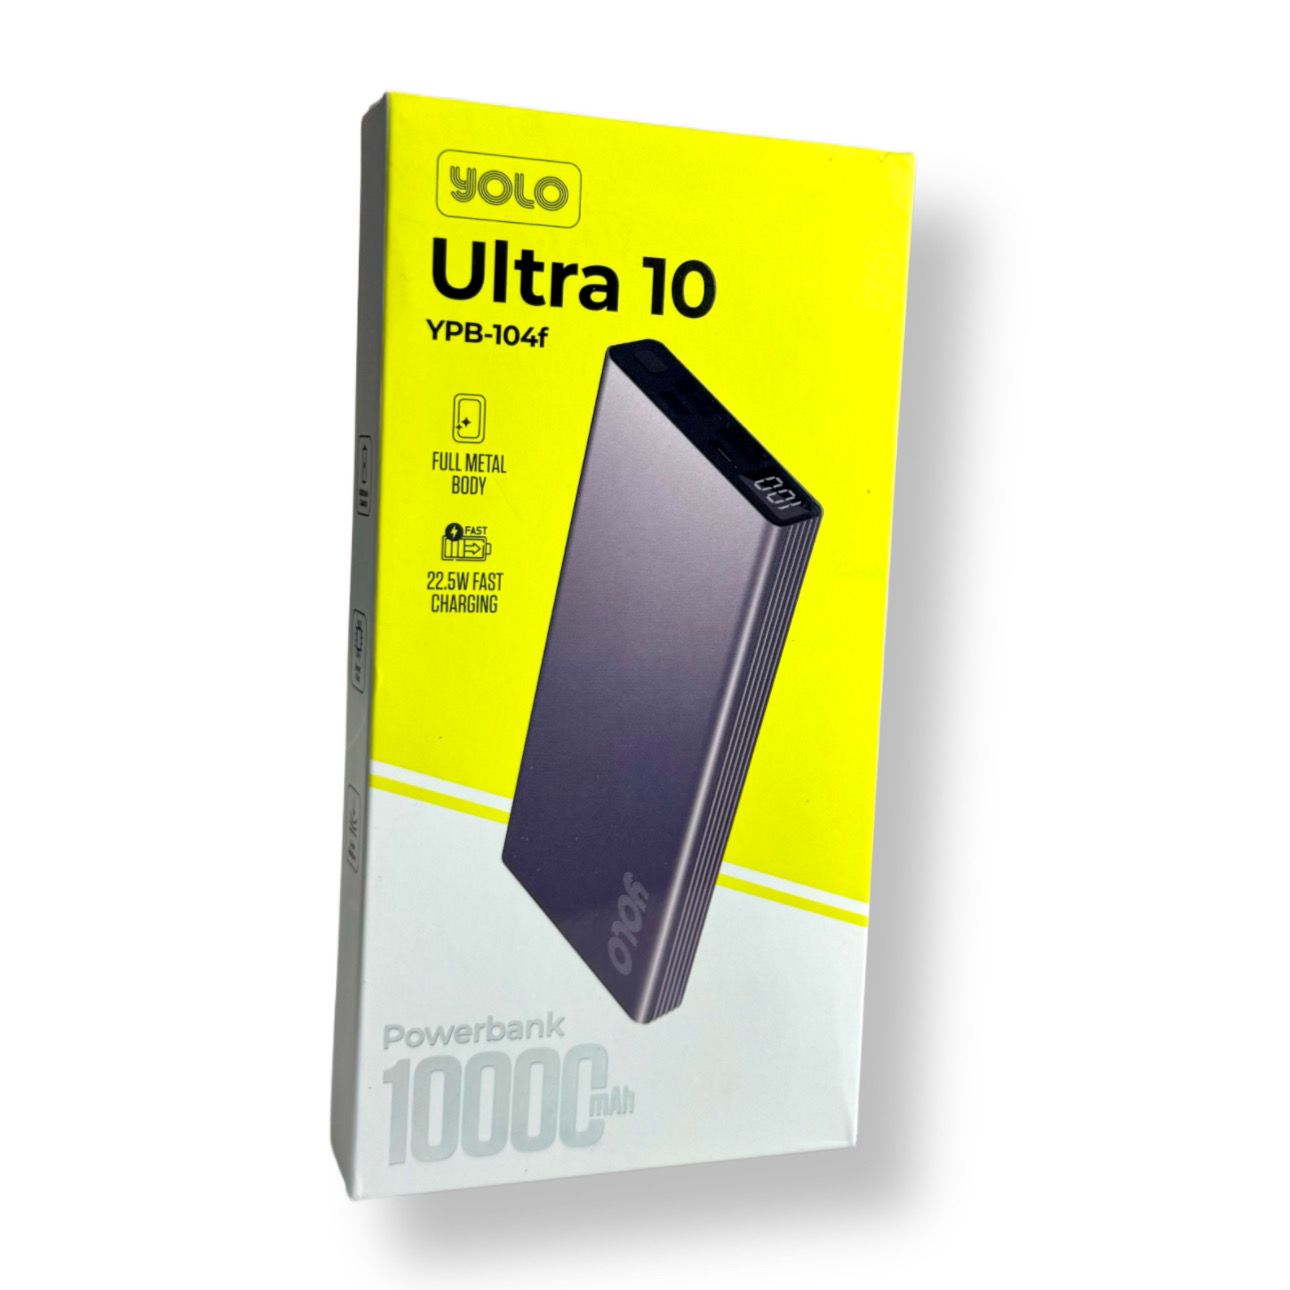 YOLO Ultra 1 Fast Charging Powerbank 10000mAh 22.5w